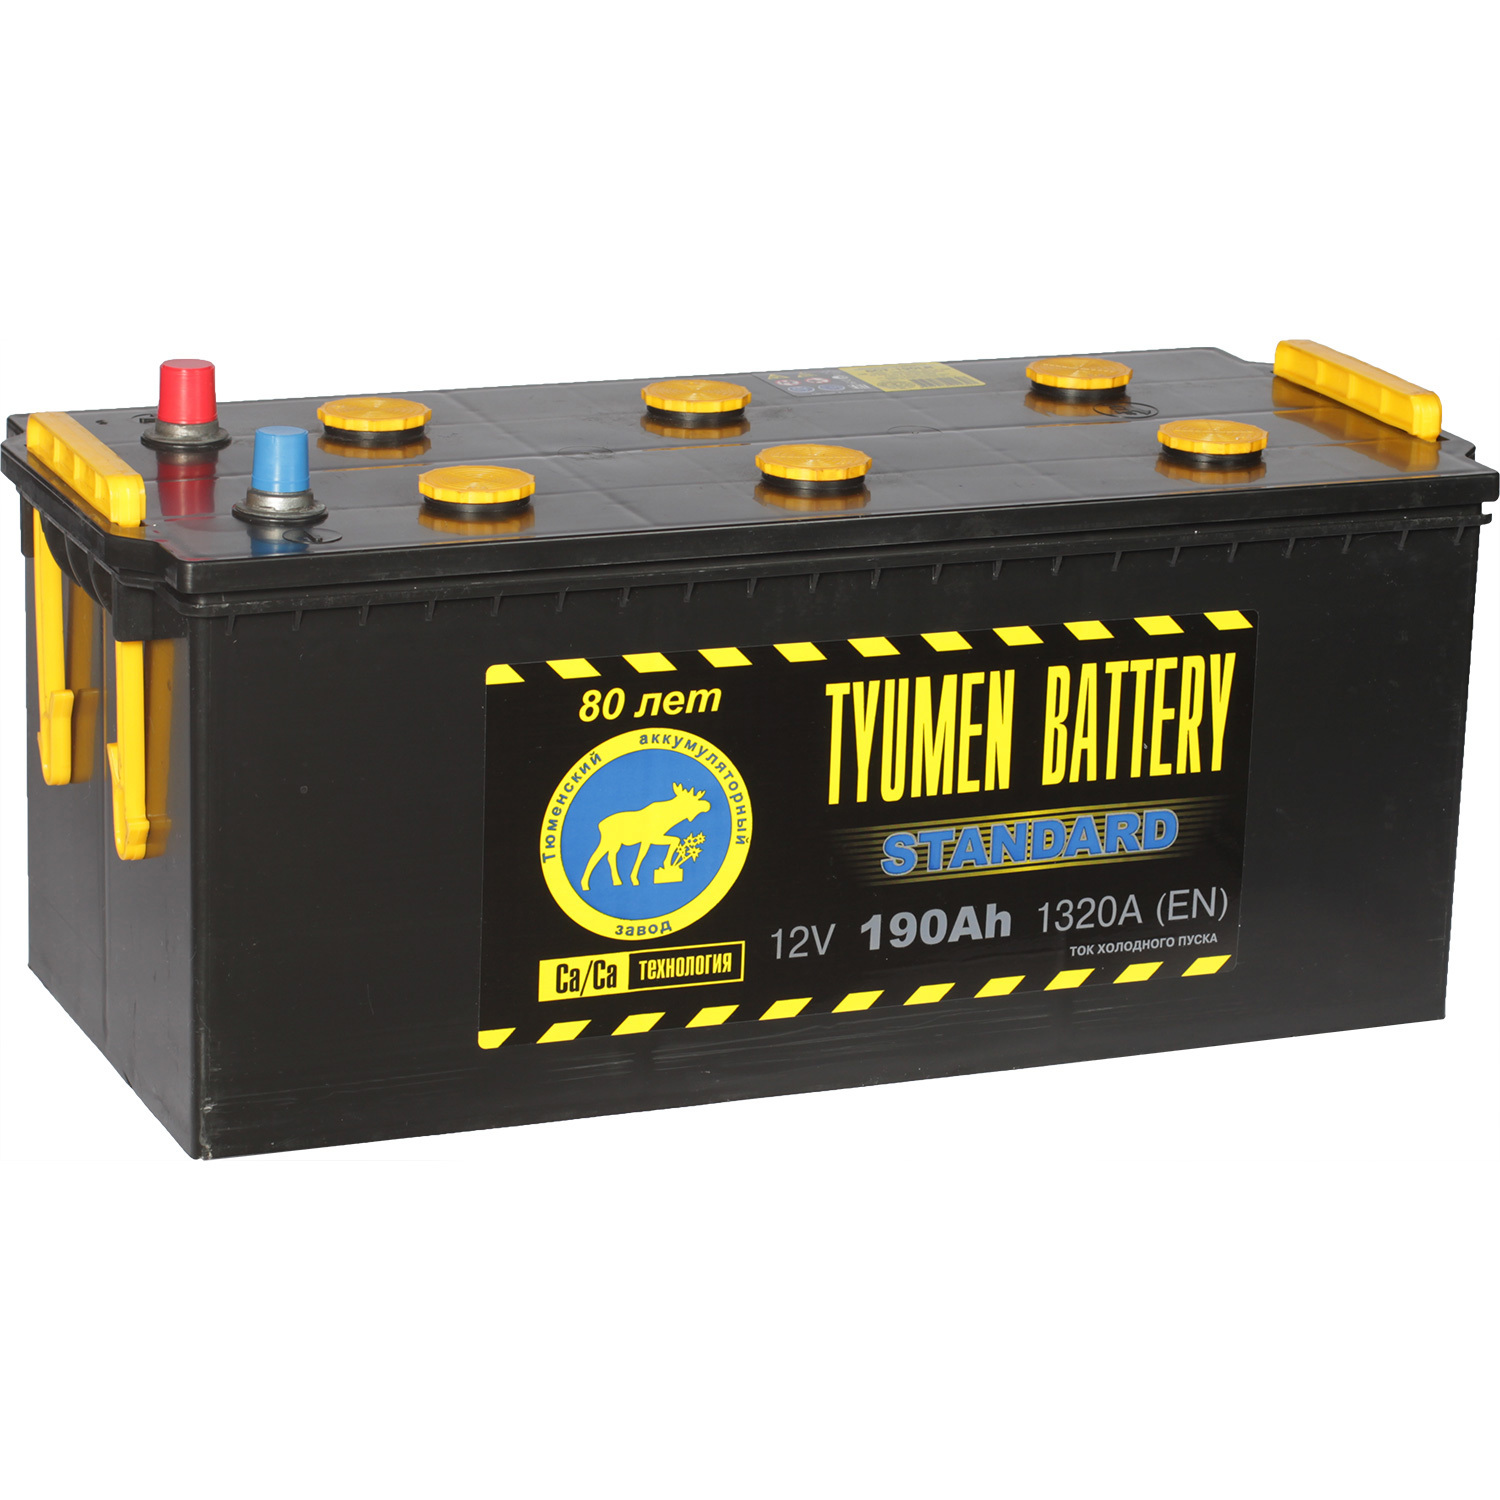 Tyumen Battery Грузовой аккумулятор Tyumen Battery Standard 190Ач о/п конус